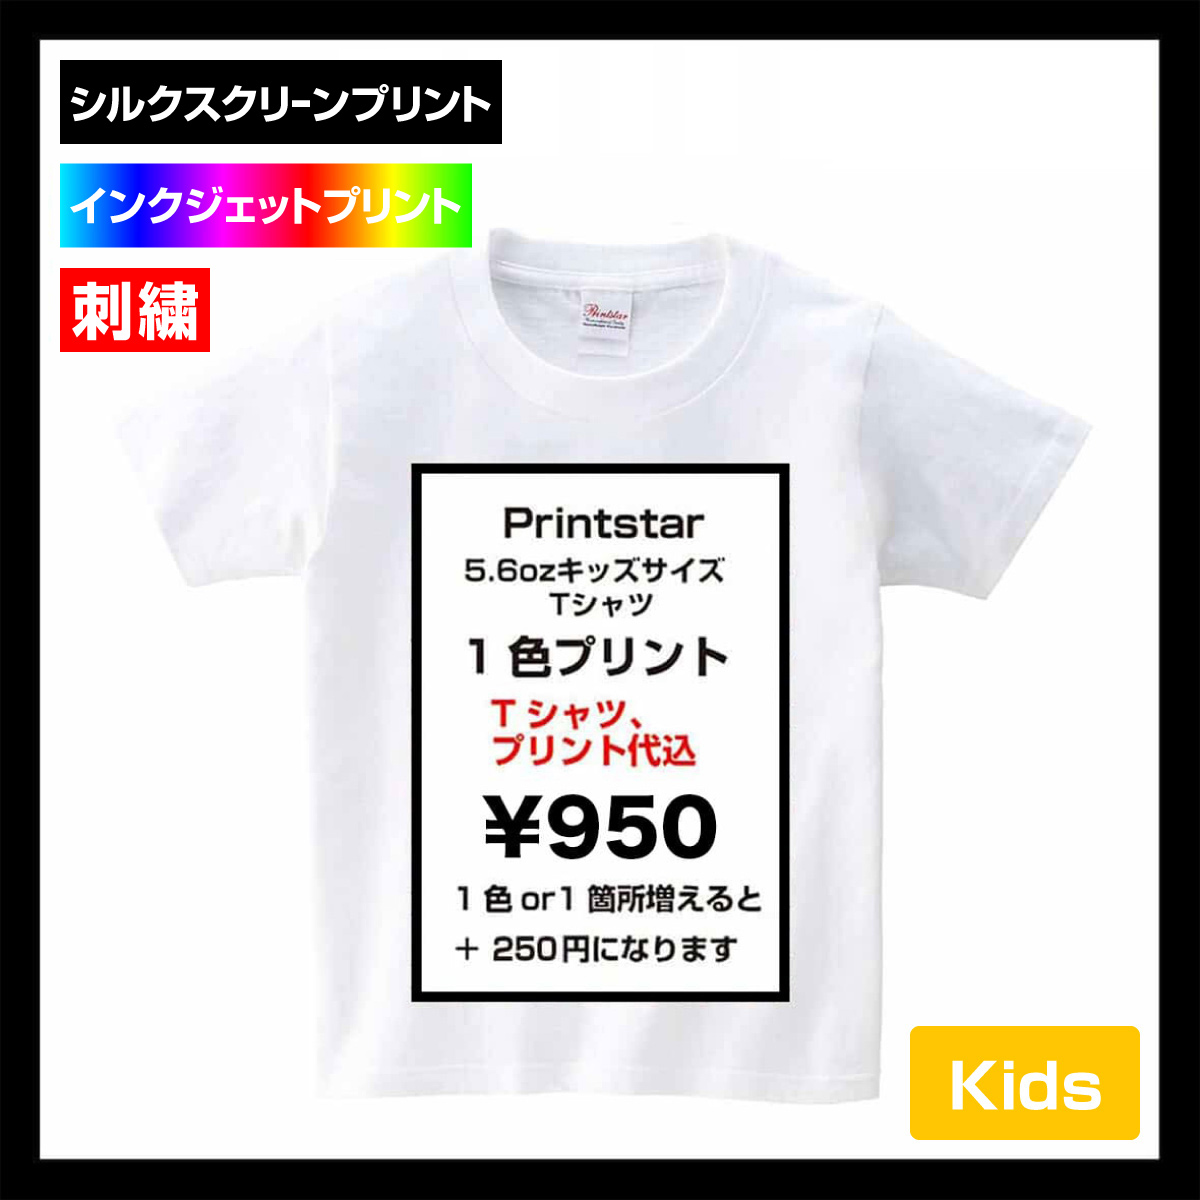 Printstar プリントスター 5.6 oz ヘビーウェイト Tシャツ <キッズサイズ> (品番00085-CVT-KIDS)